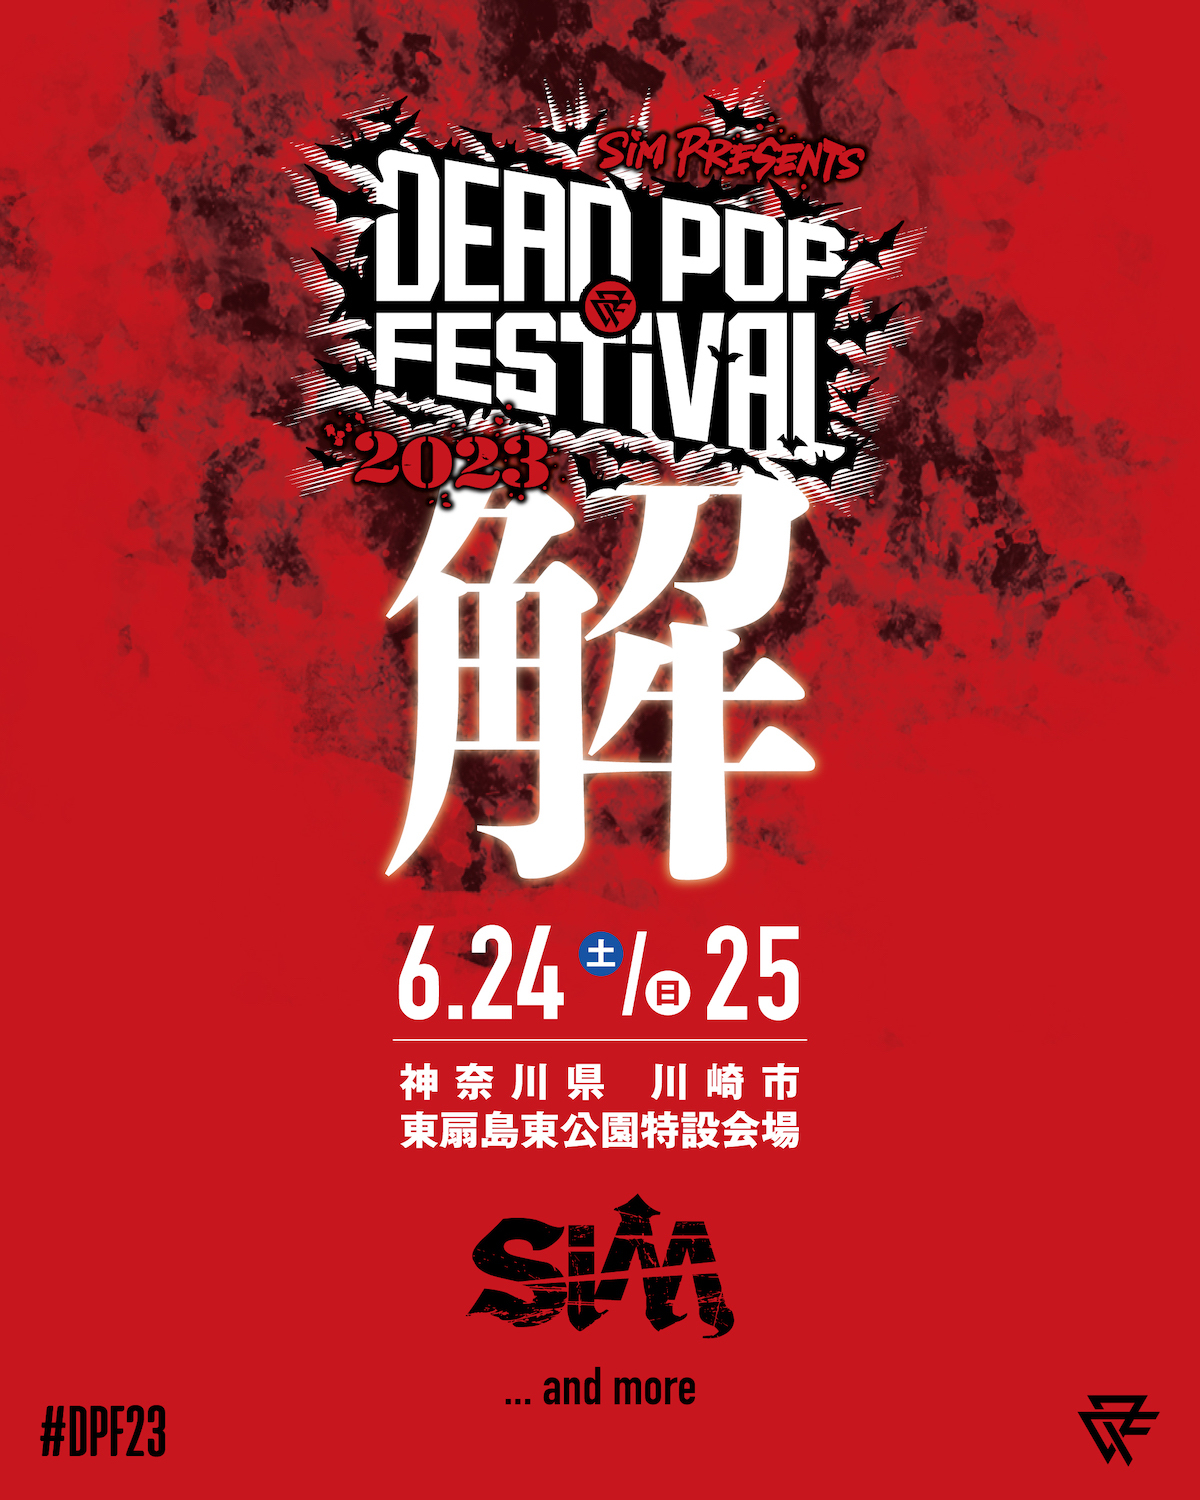 『DEAD POP FESTiVAL 2023 -解-』